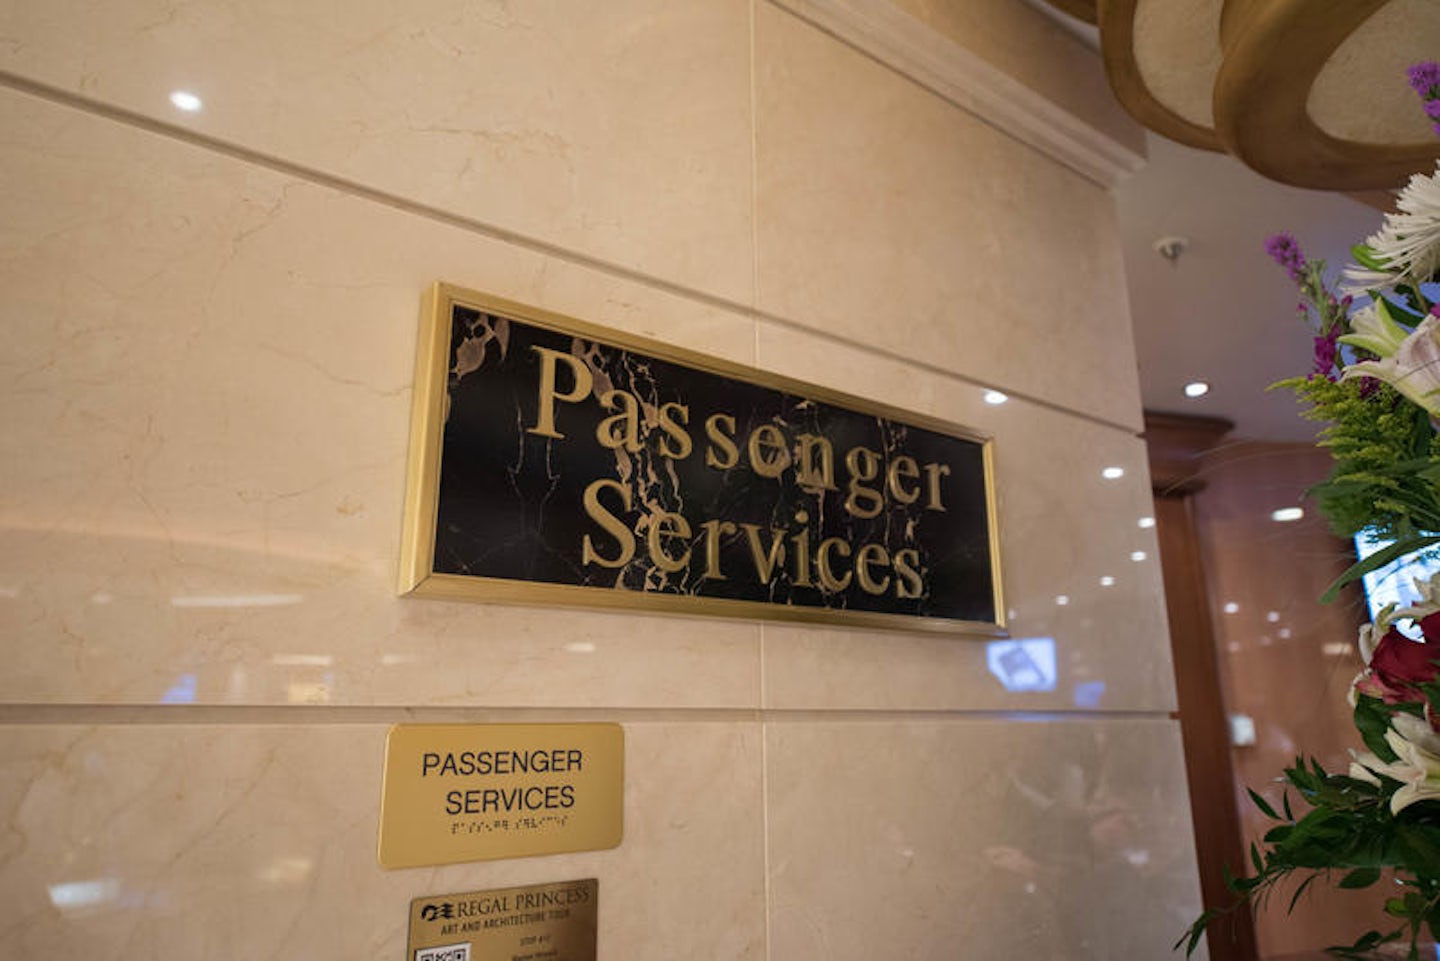 Passenger Services on Regal Princess